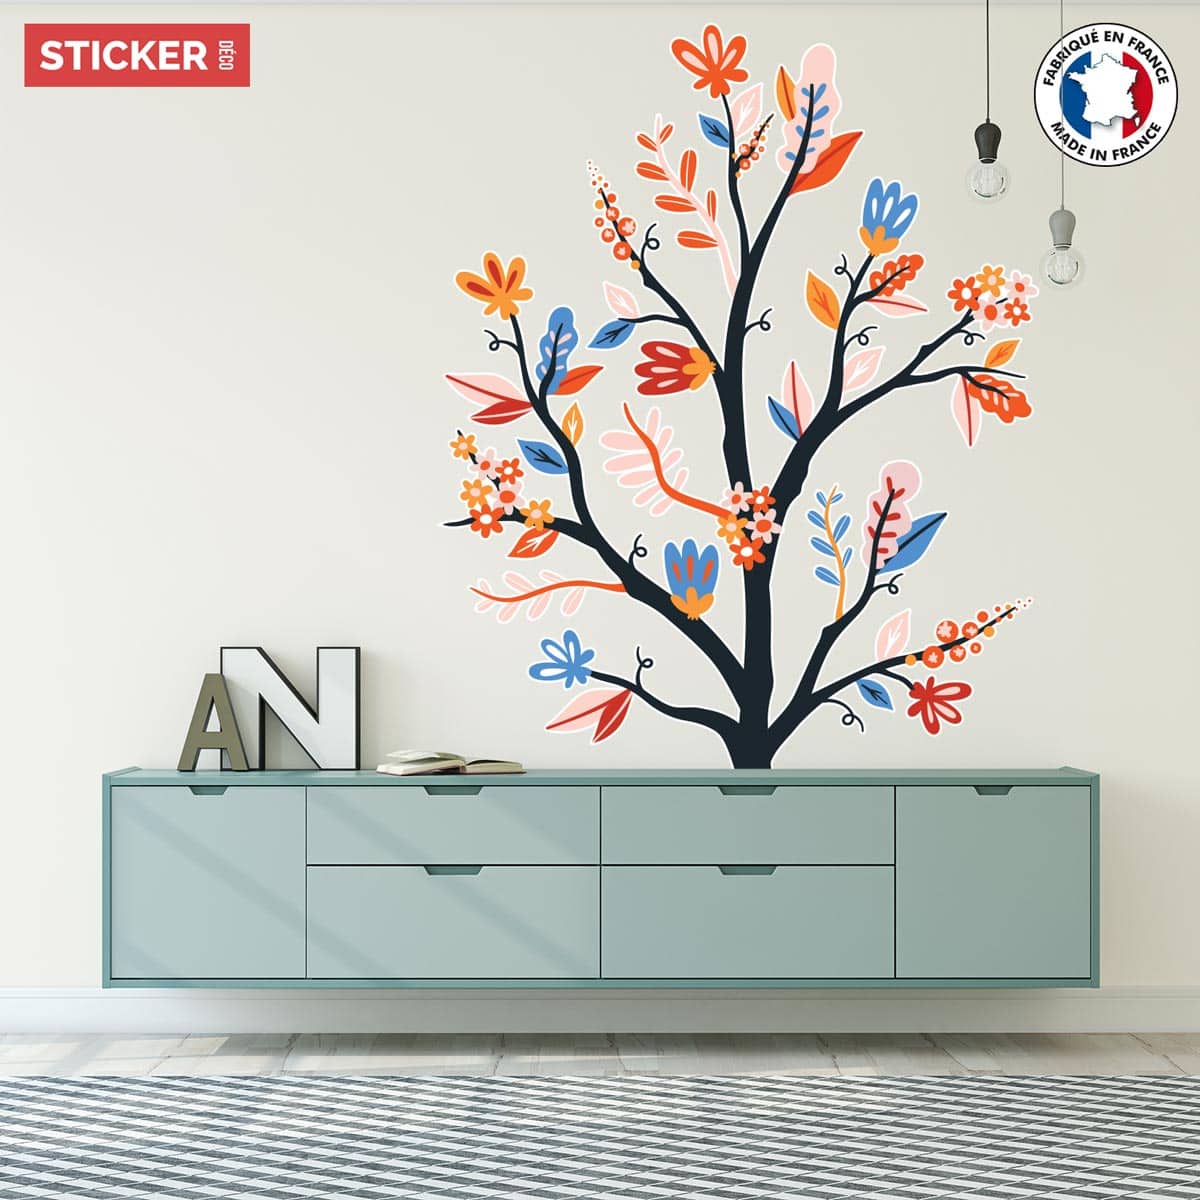 Sticker Mural Fleur Arbre monochrome avec branches think - TenStickers